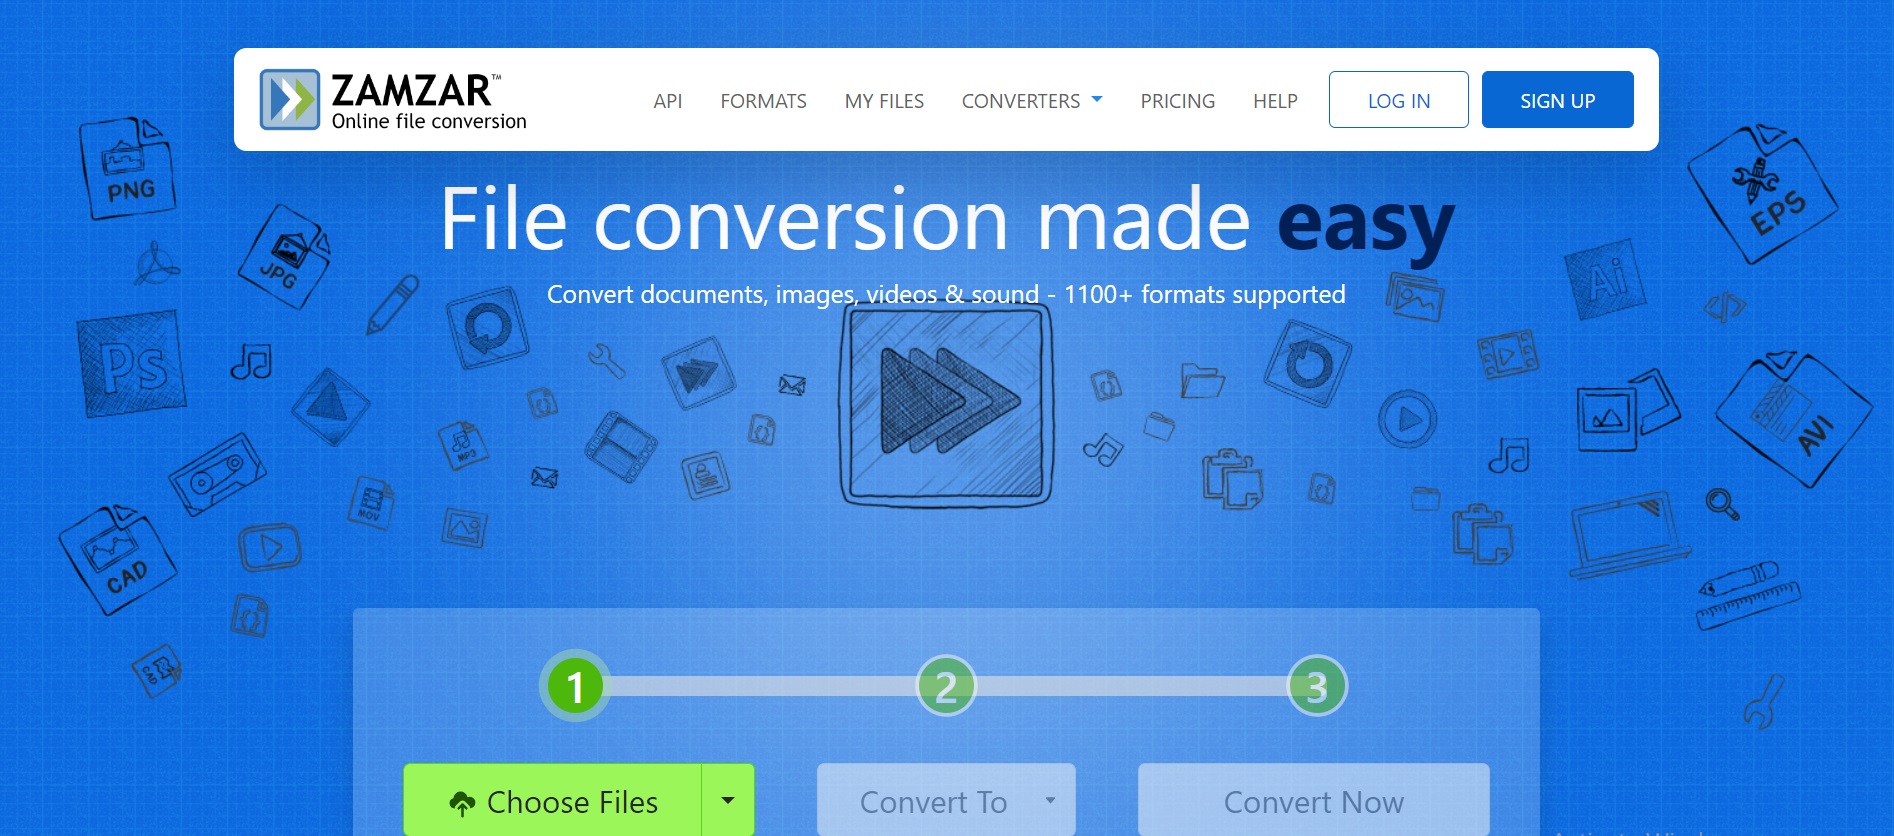 online audio converter